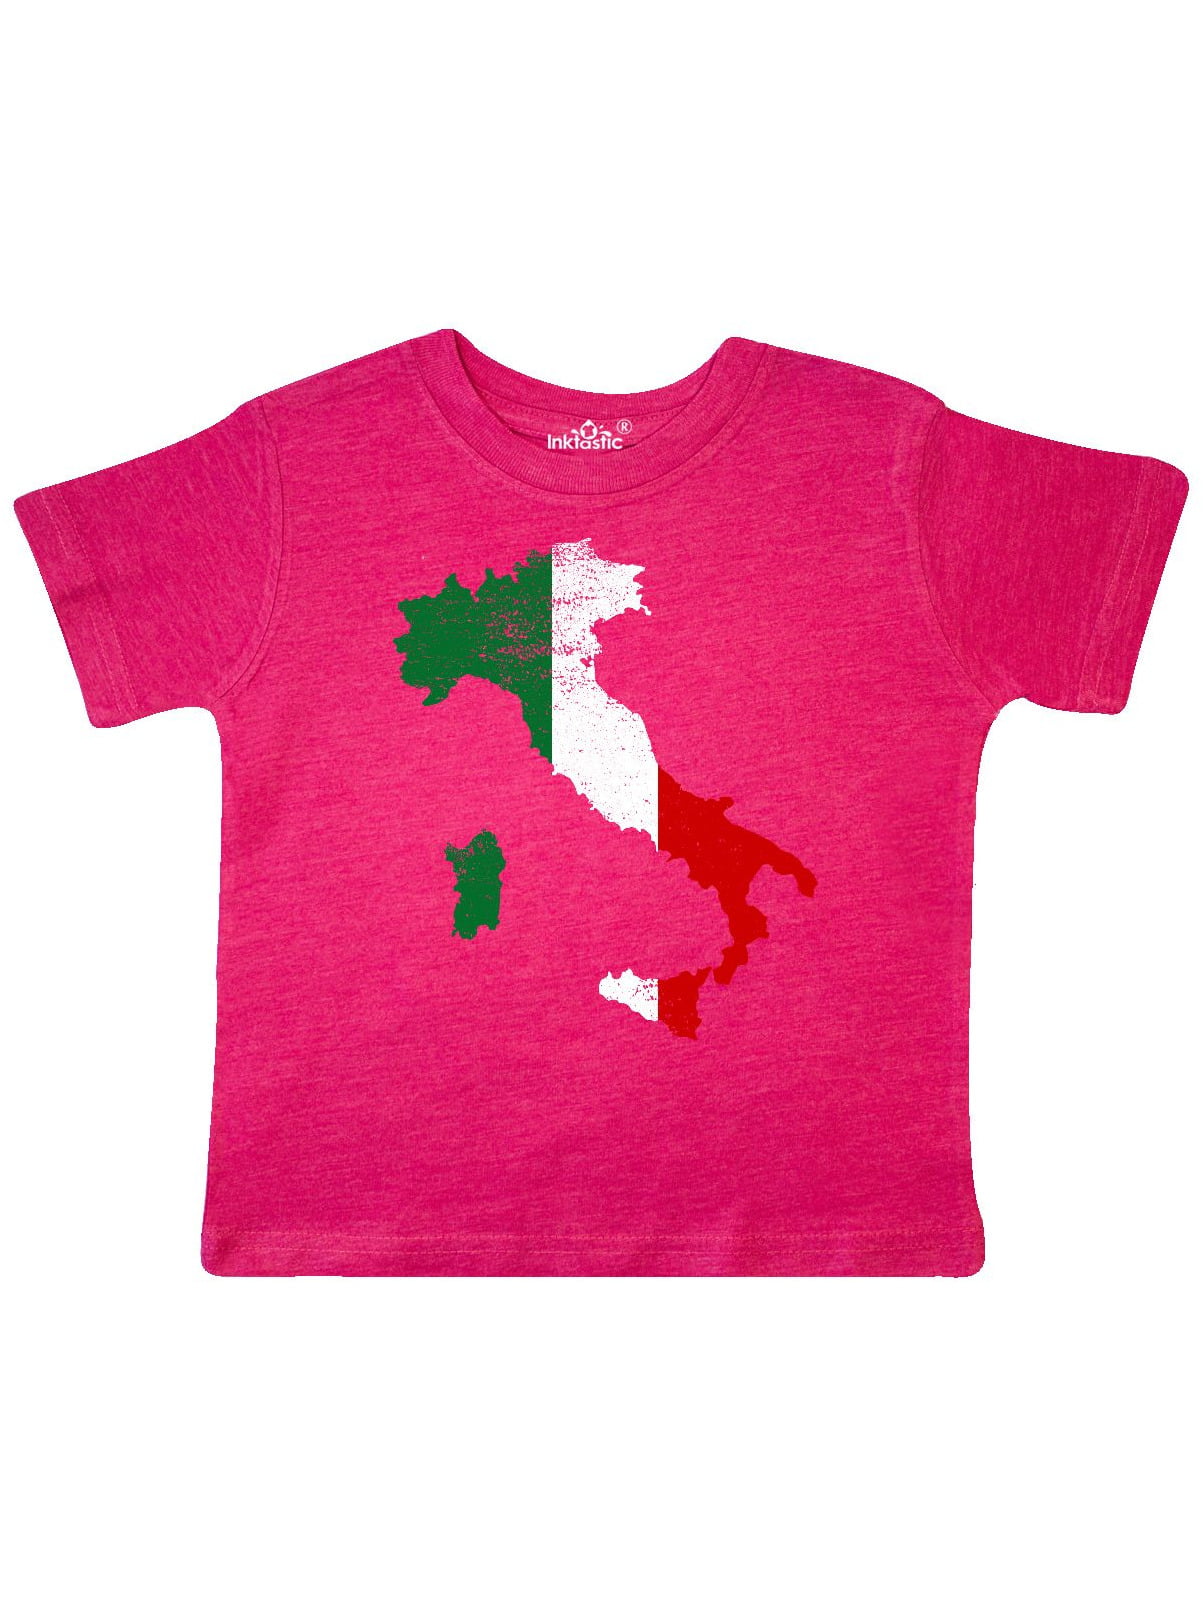 Italy Kid's T-Shirt Country Flag Map Top Children Boys Girls Unisex Italian